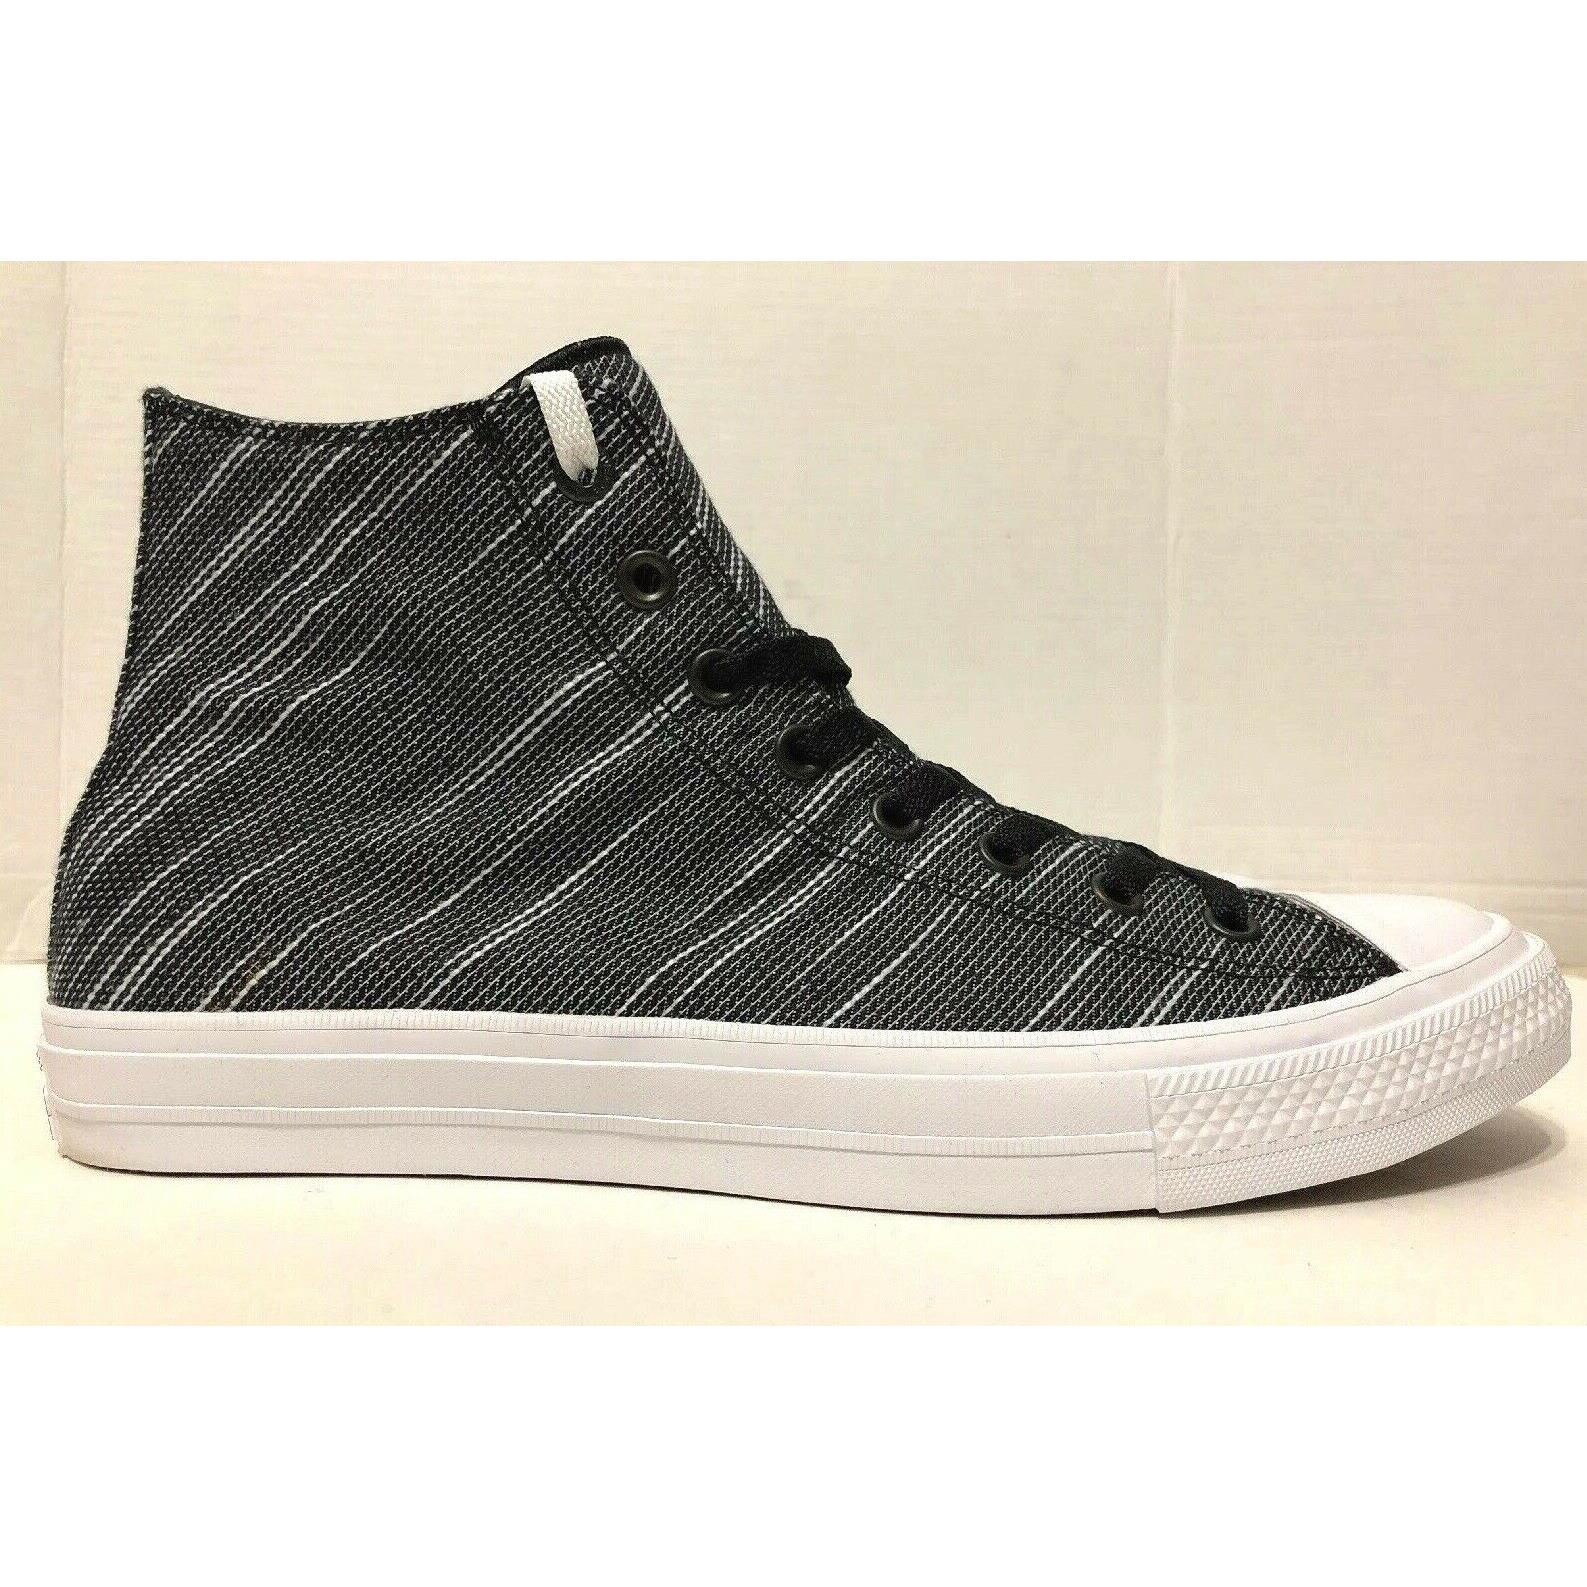 Converse Mens Chuck Taylor All Star II HI Shoes Black White 151087C Size 11